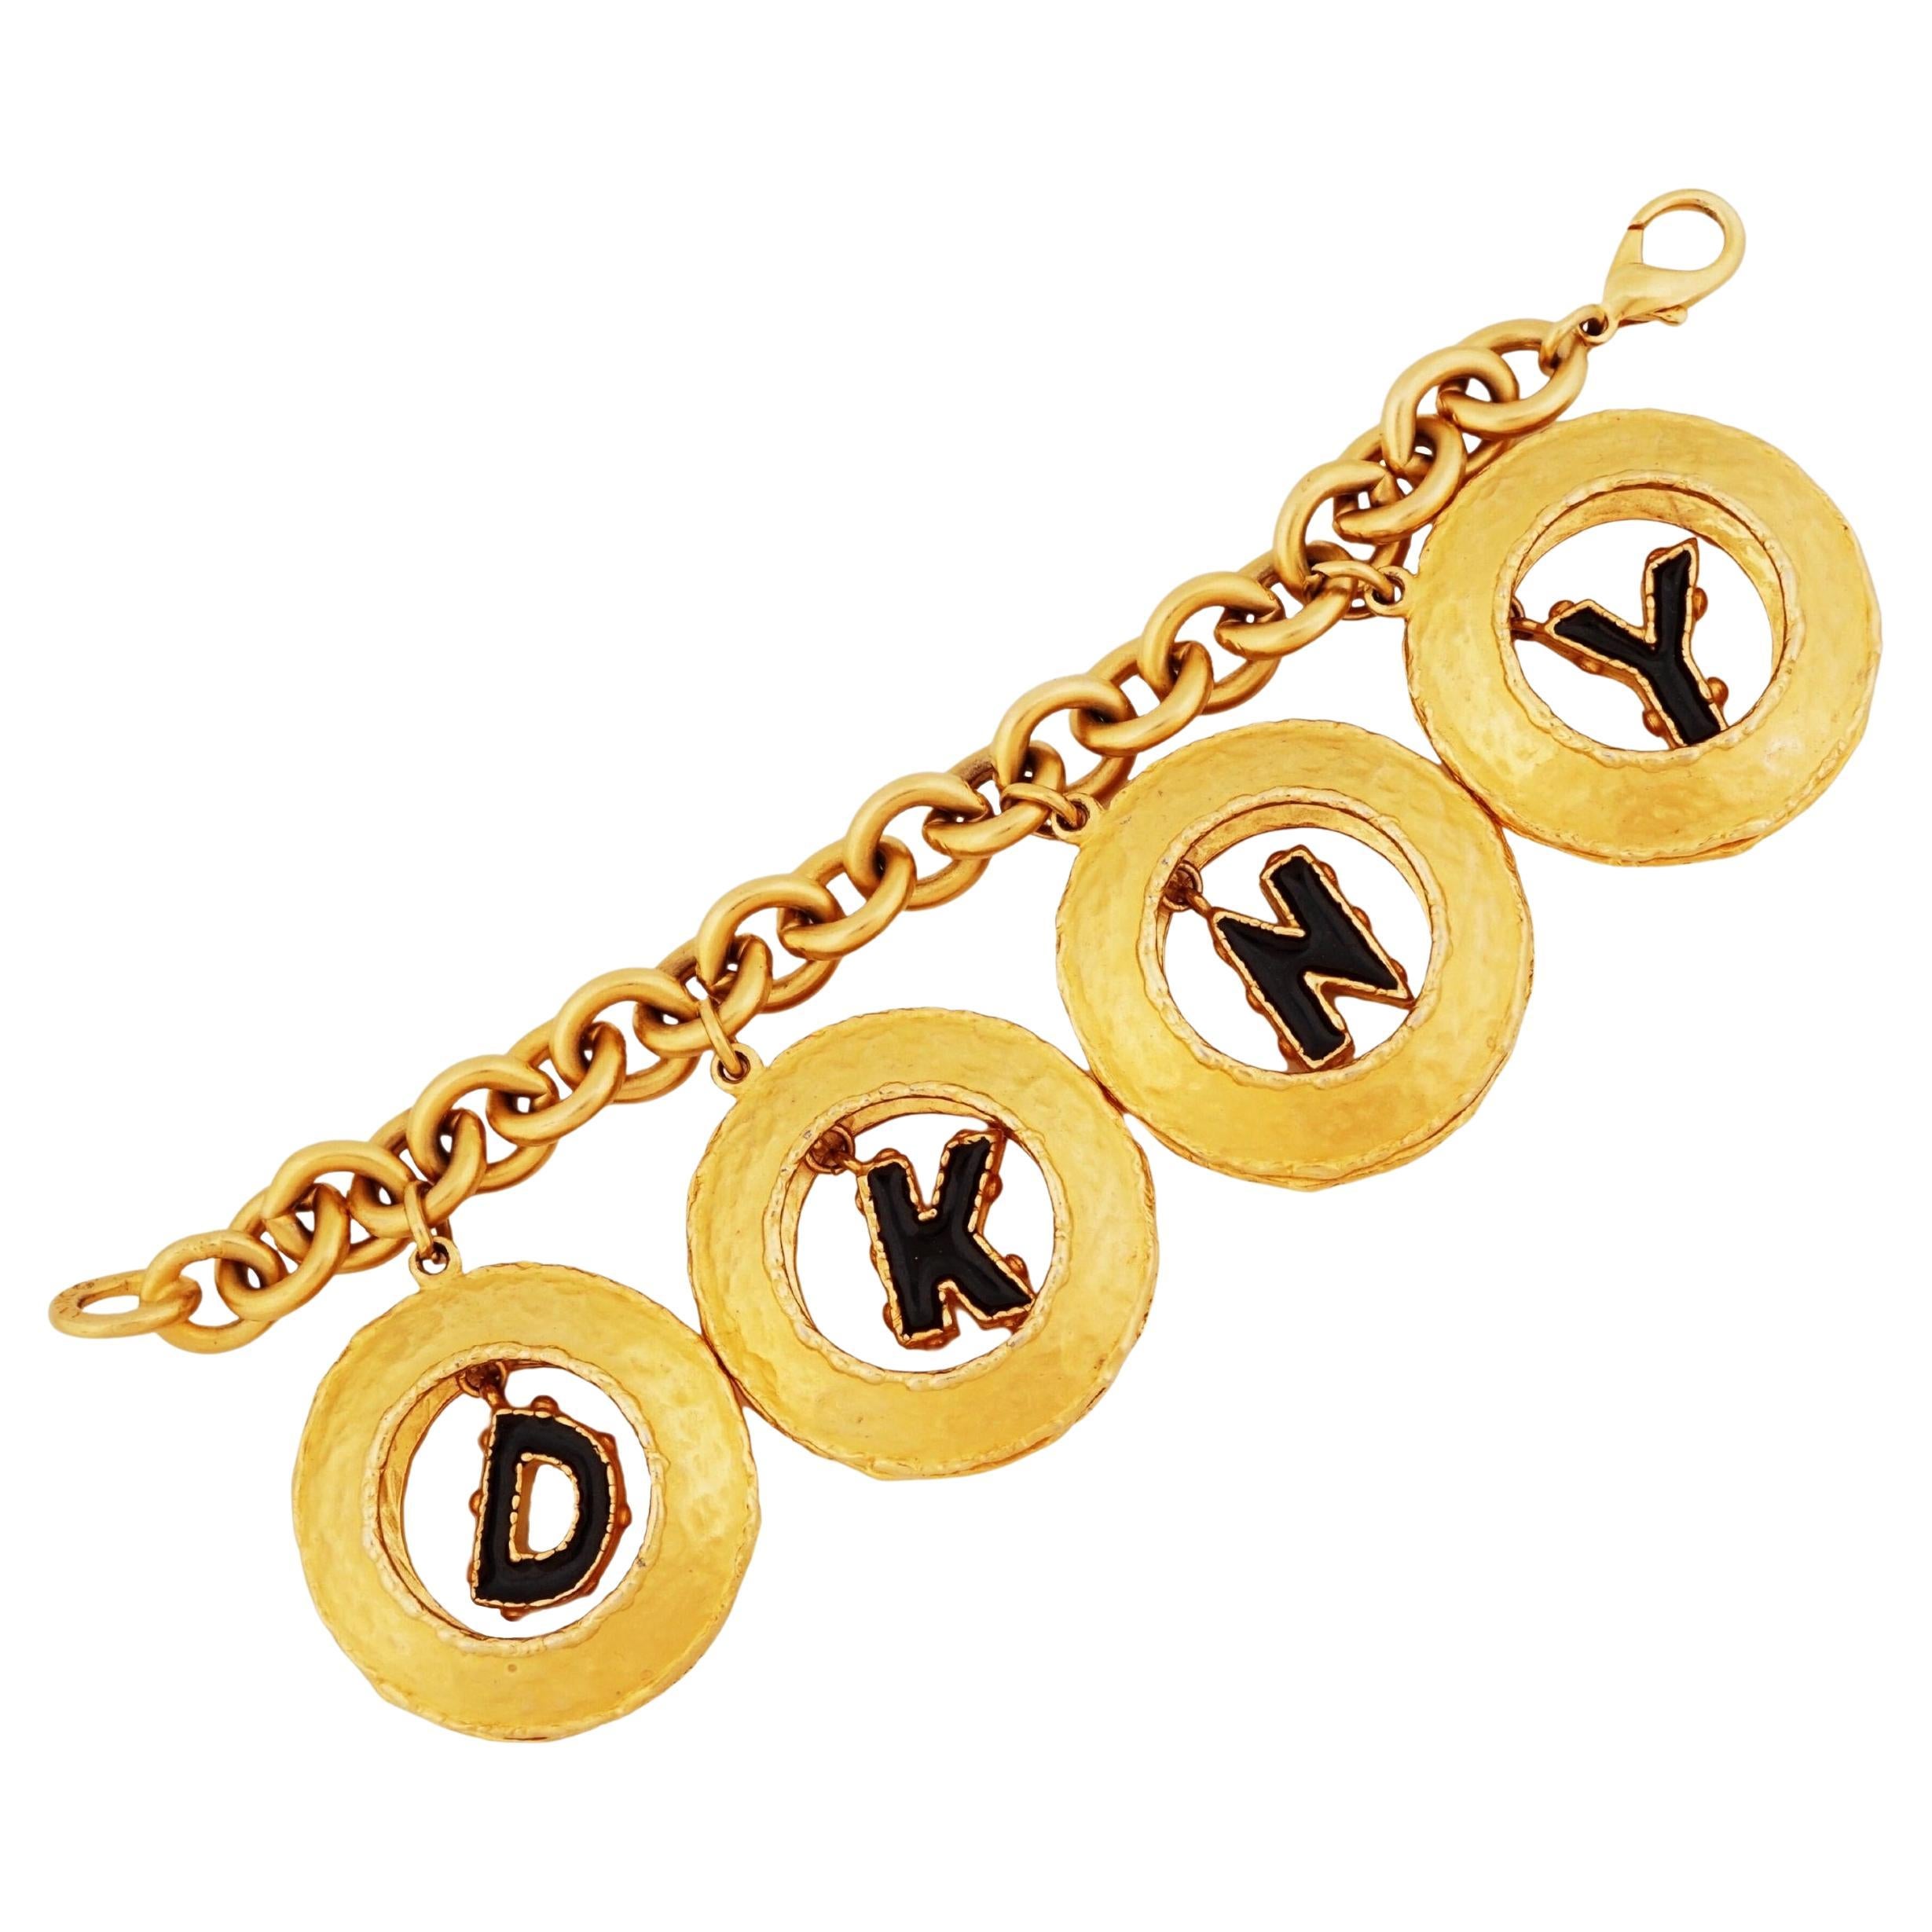 Extra Chunky Vergoldetes Statement-Charm-Armband „DKNY“ von Donna Karan, 1980er Jahre